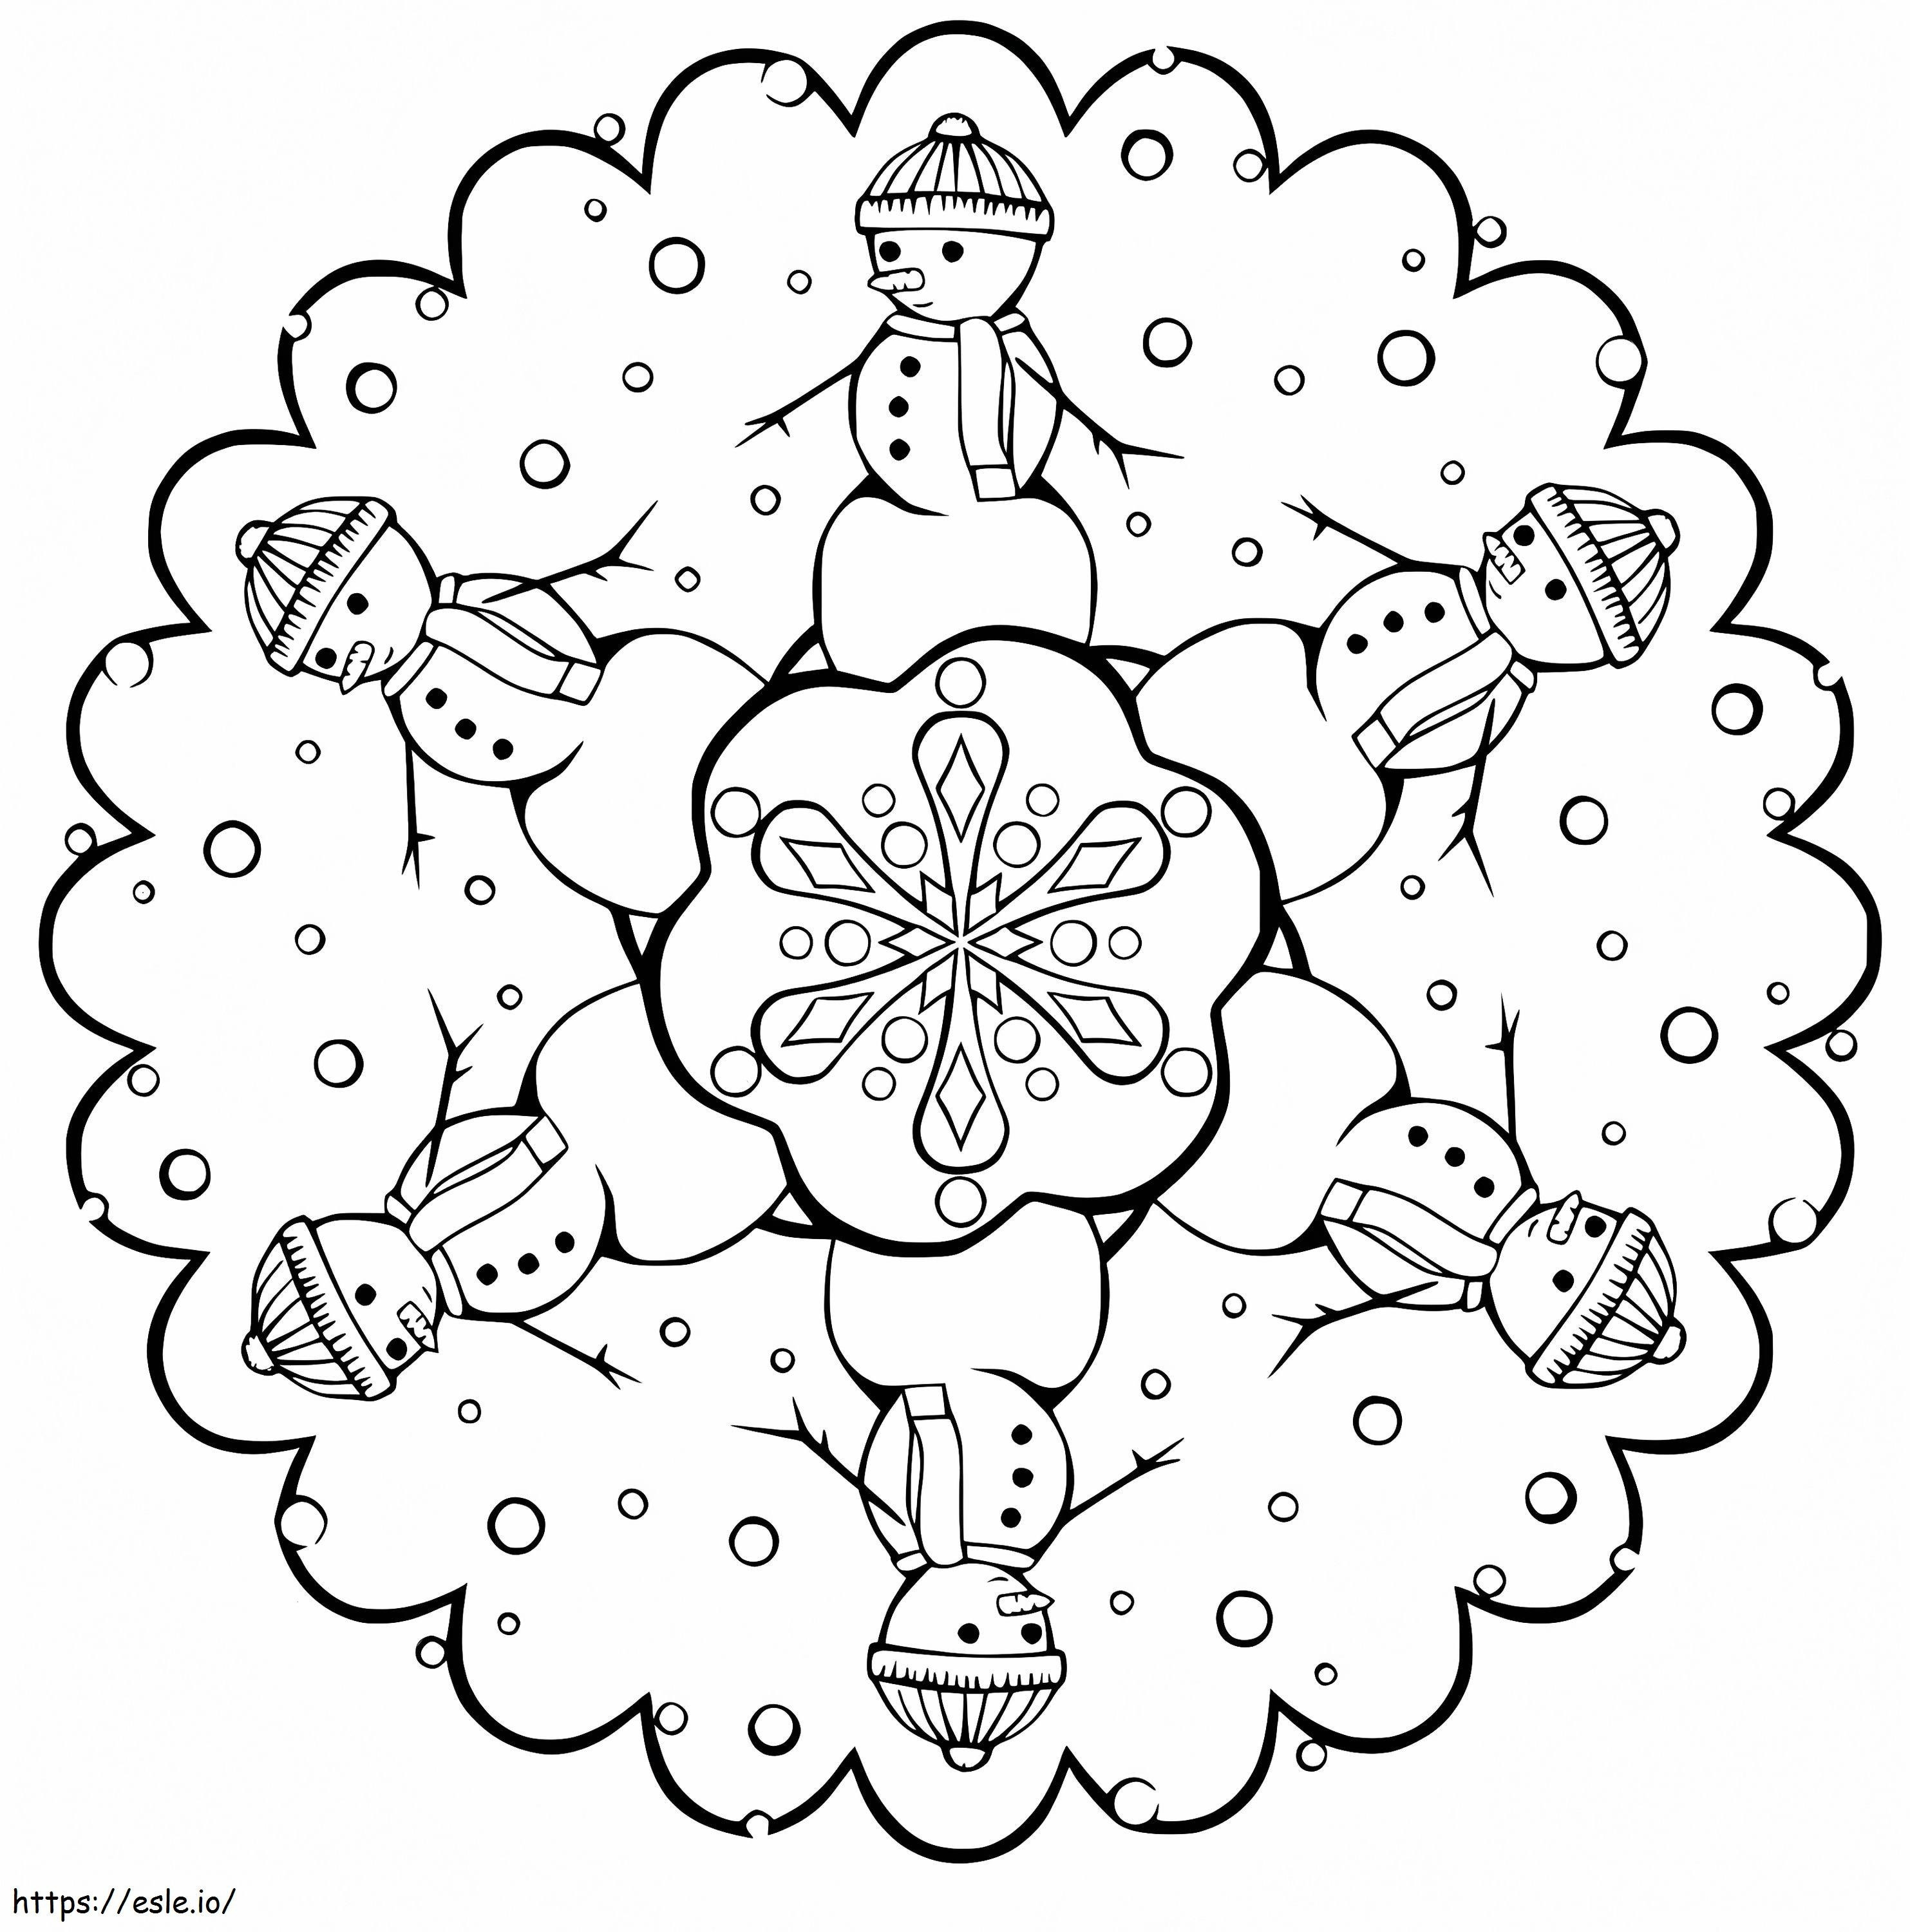 Kardan adamlarla Noel Mandala boyama